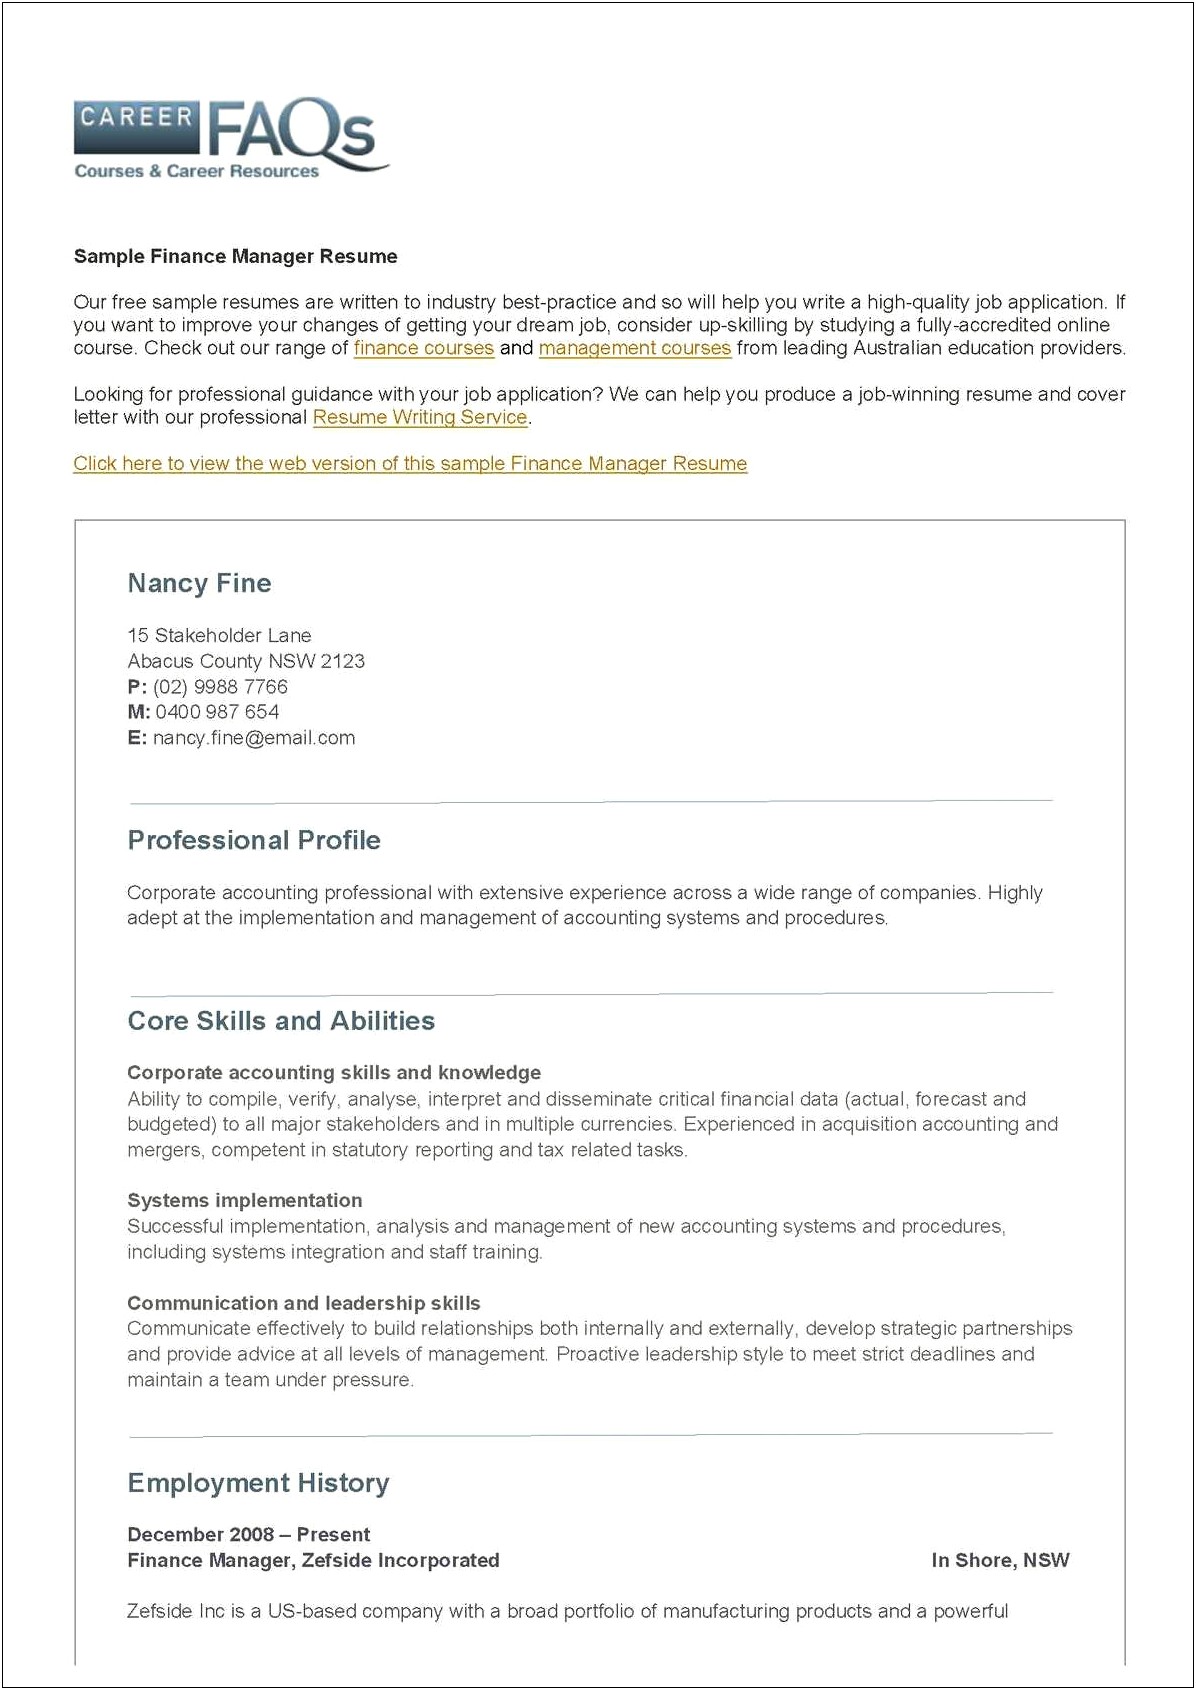 Free Sample Finance Manager Resume